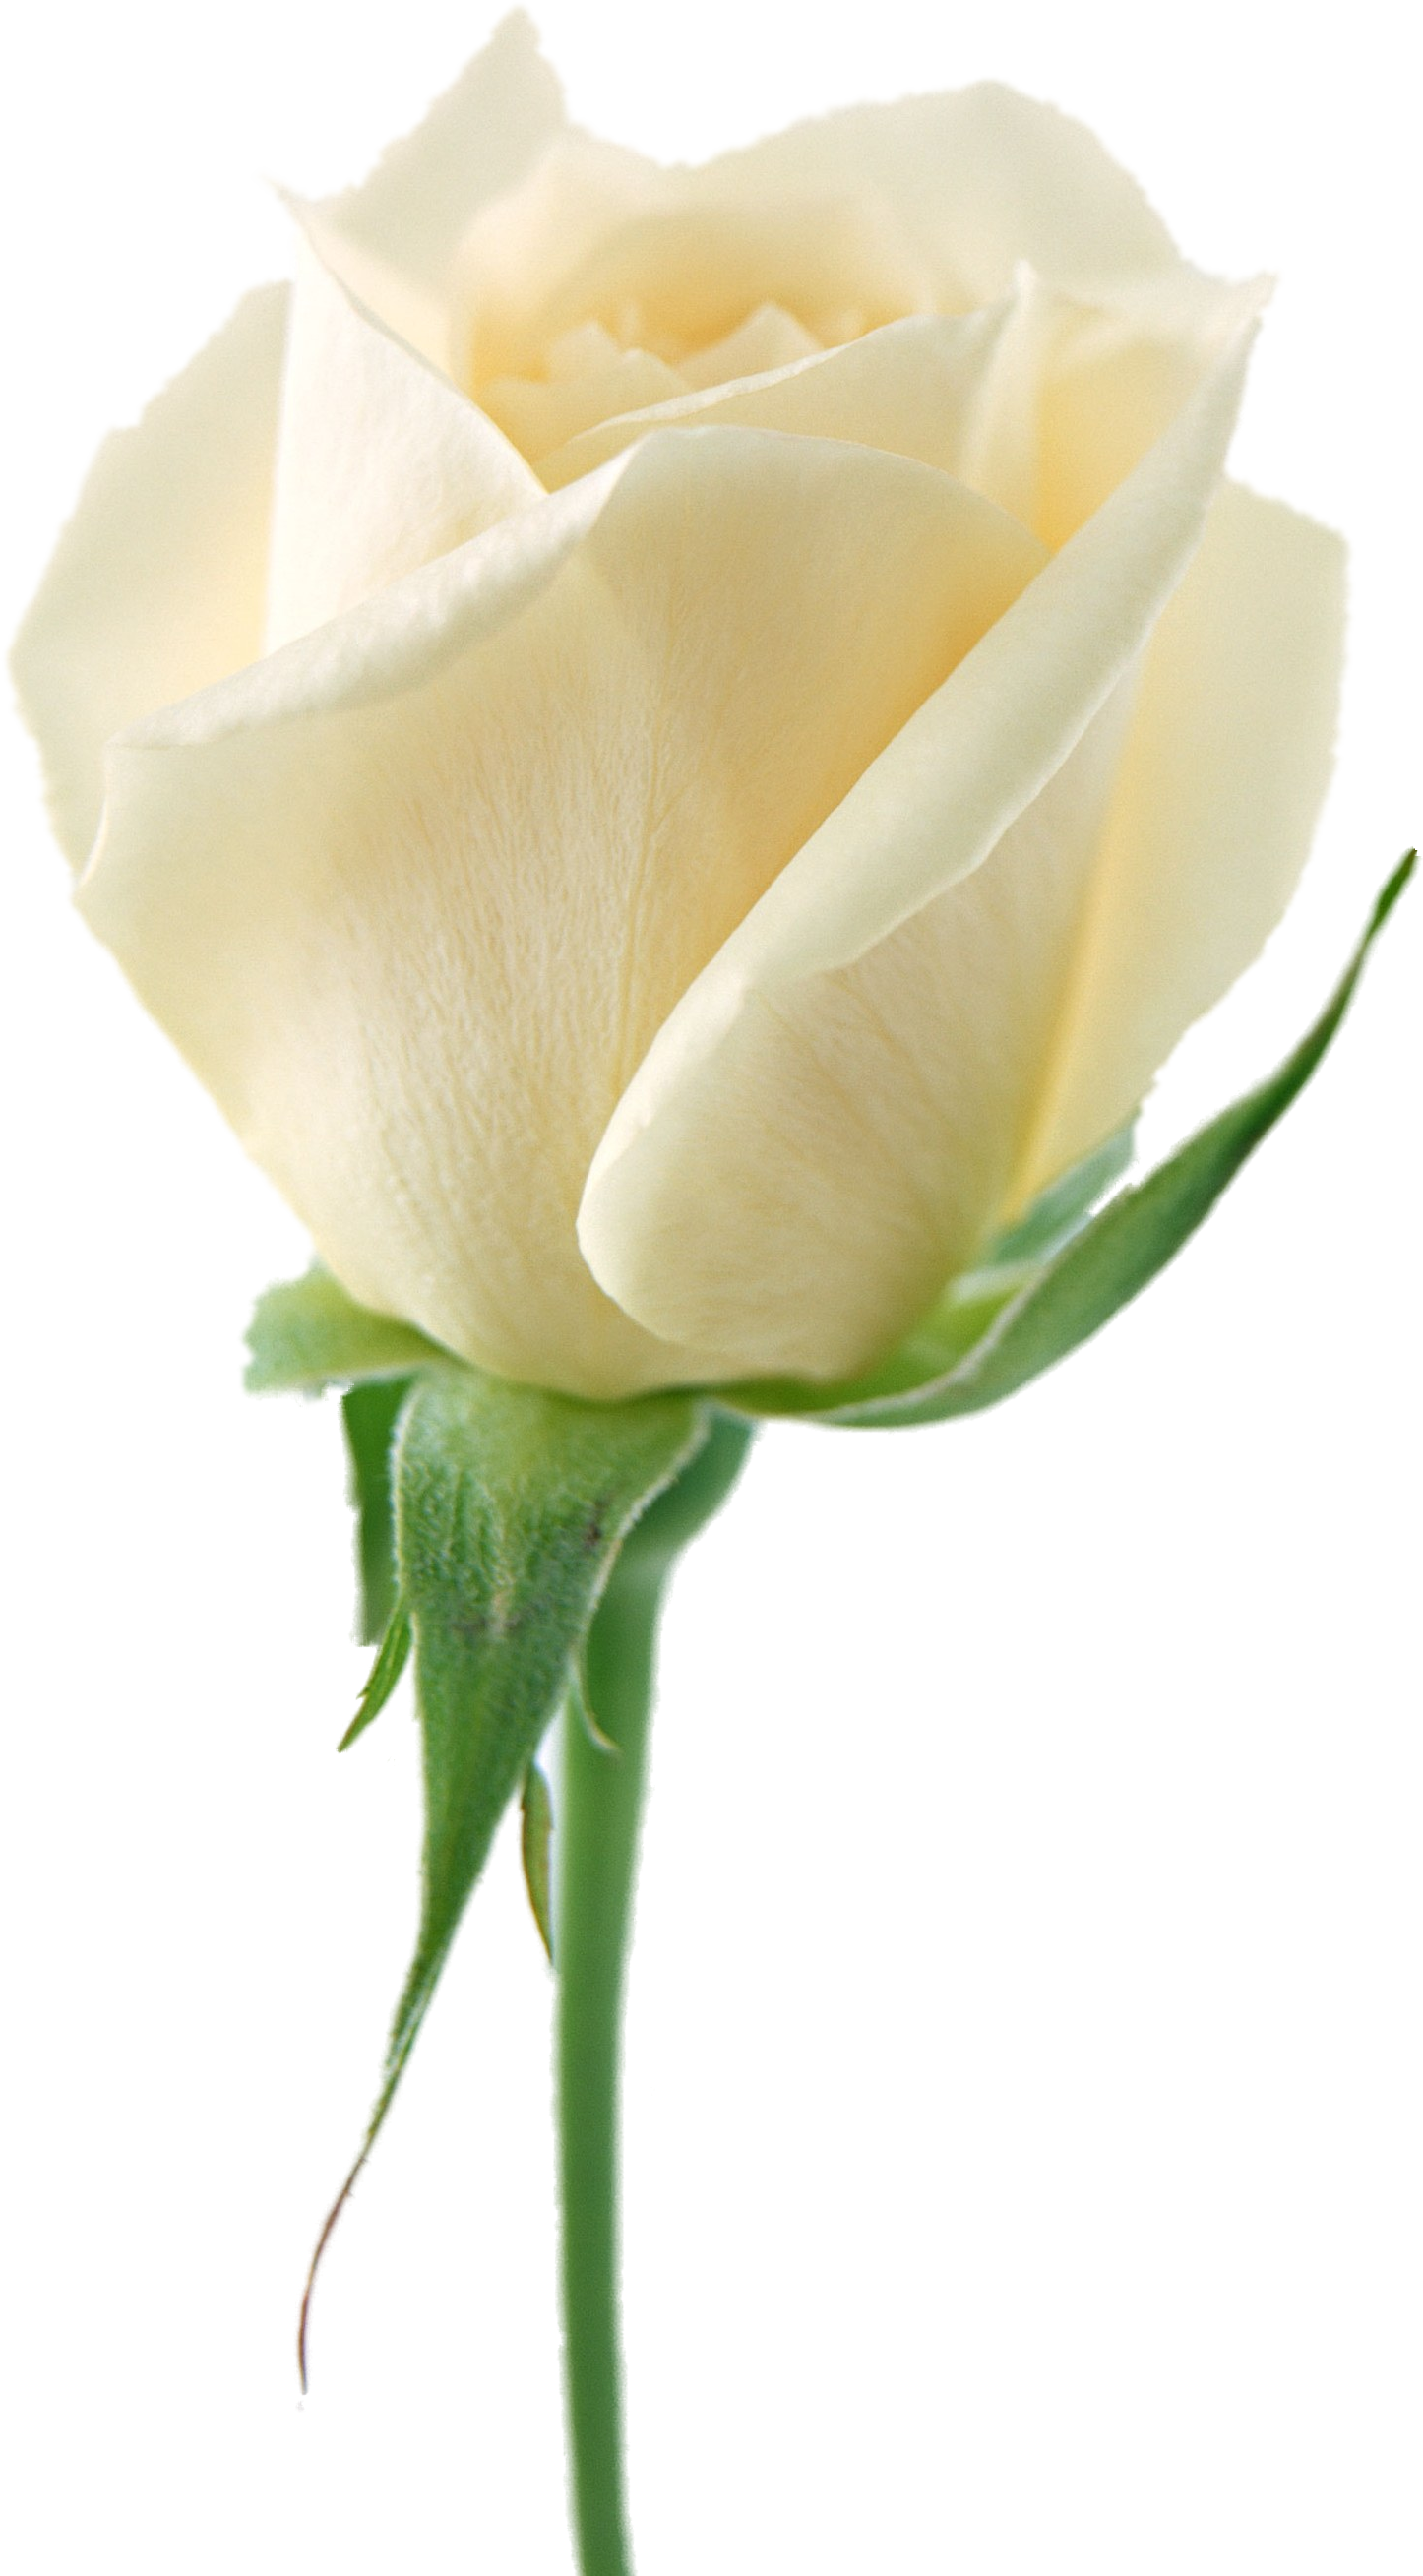 White rose images